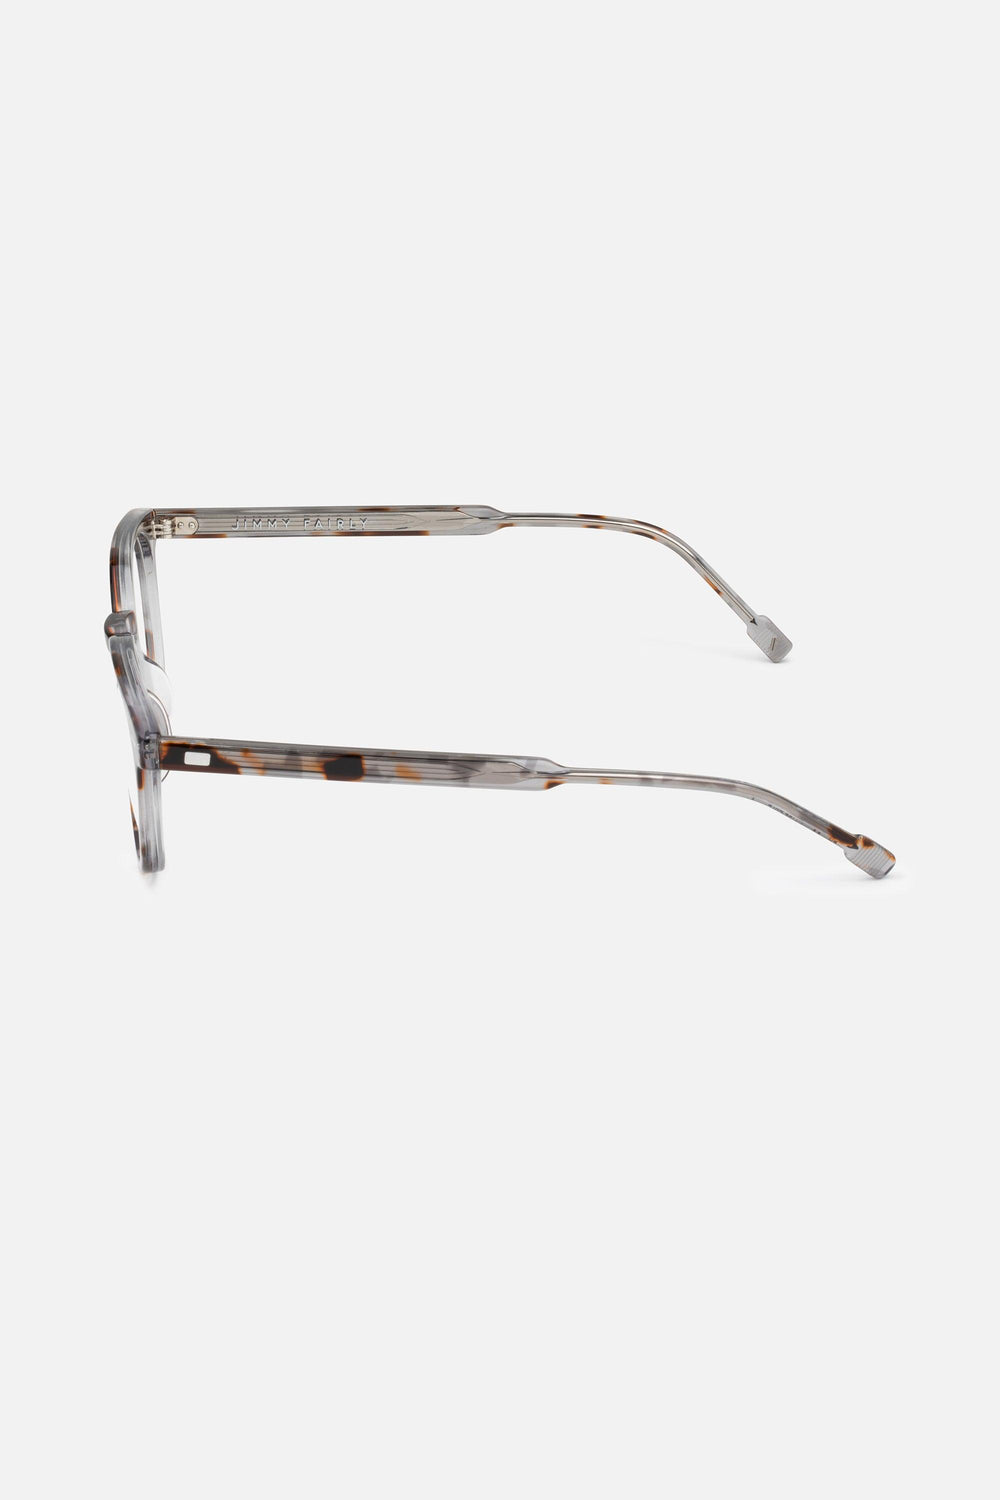 The best sunglasses for anyone to get | Oakley Sunglass | TikTok